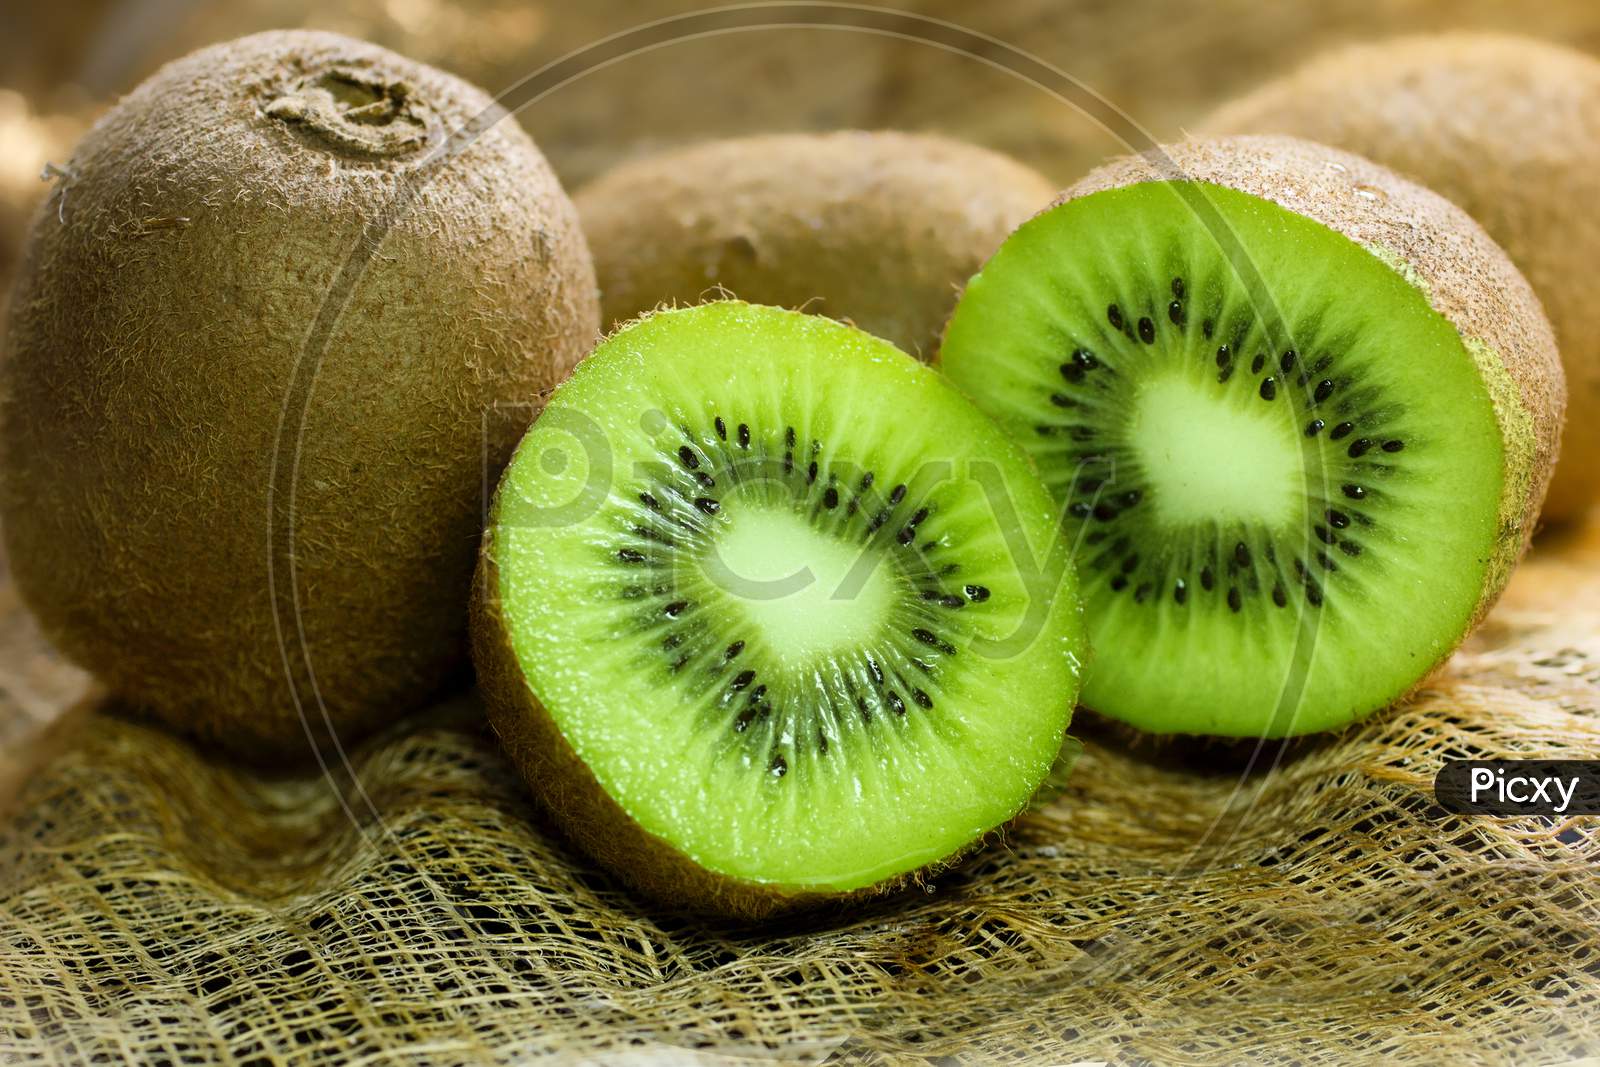 Selective Focus on Kiwi Fruit